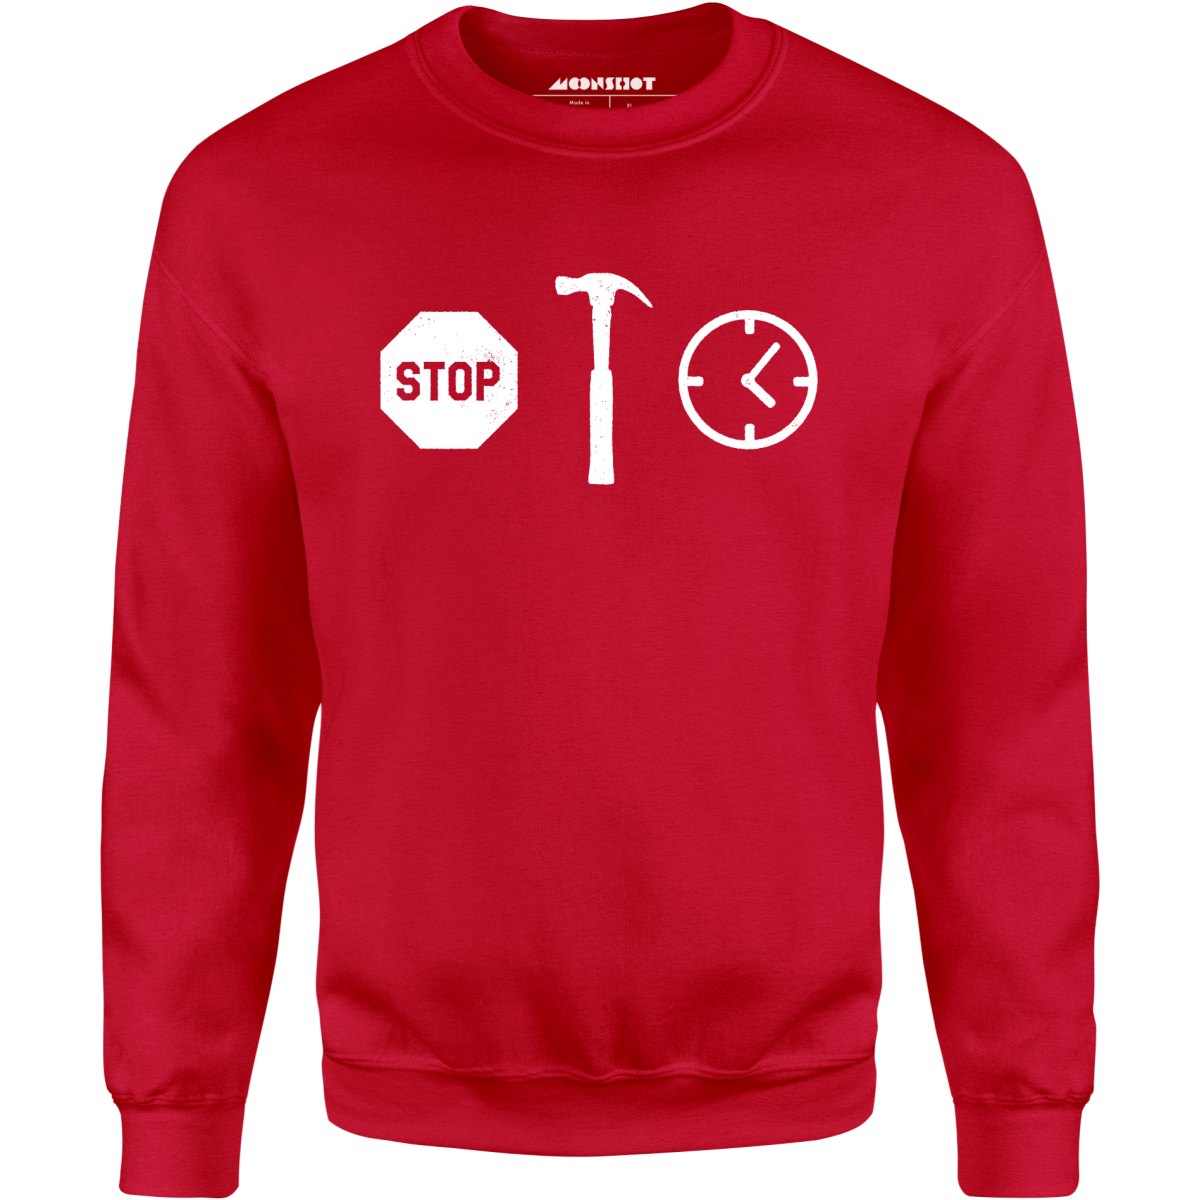 Stop! Hammer Time - Unisex Sweatshirt